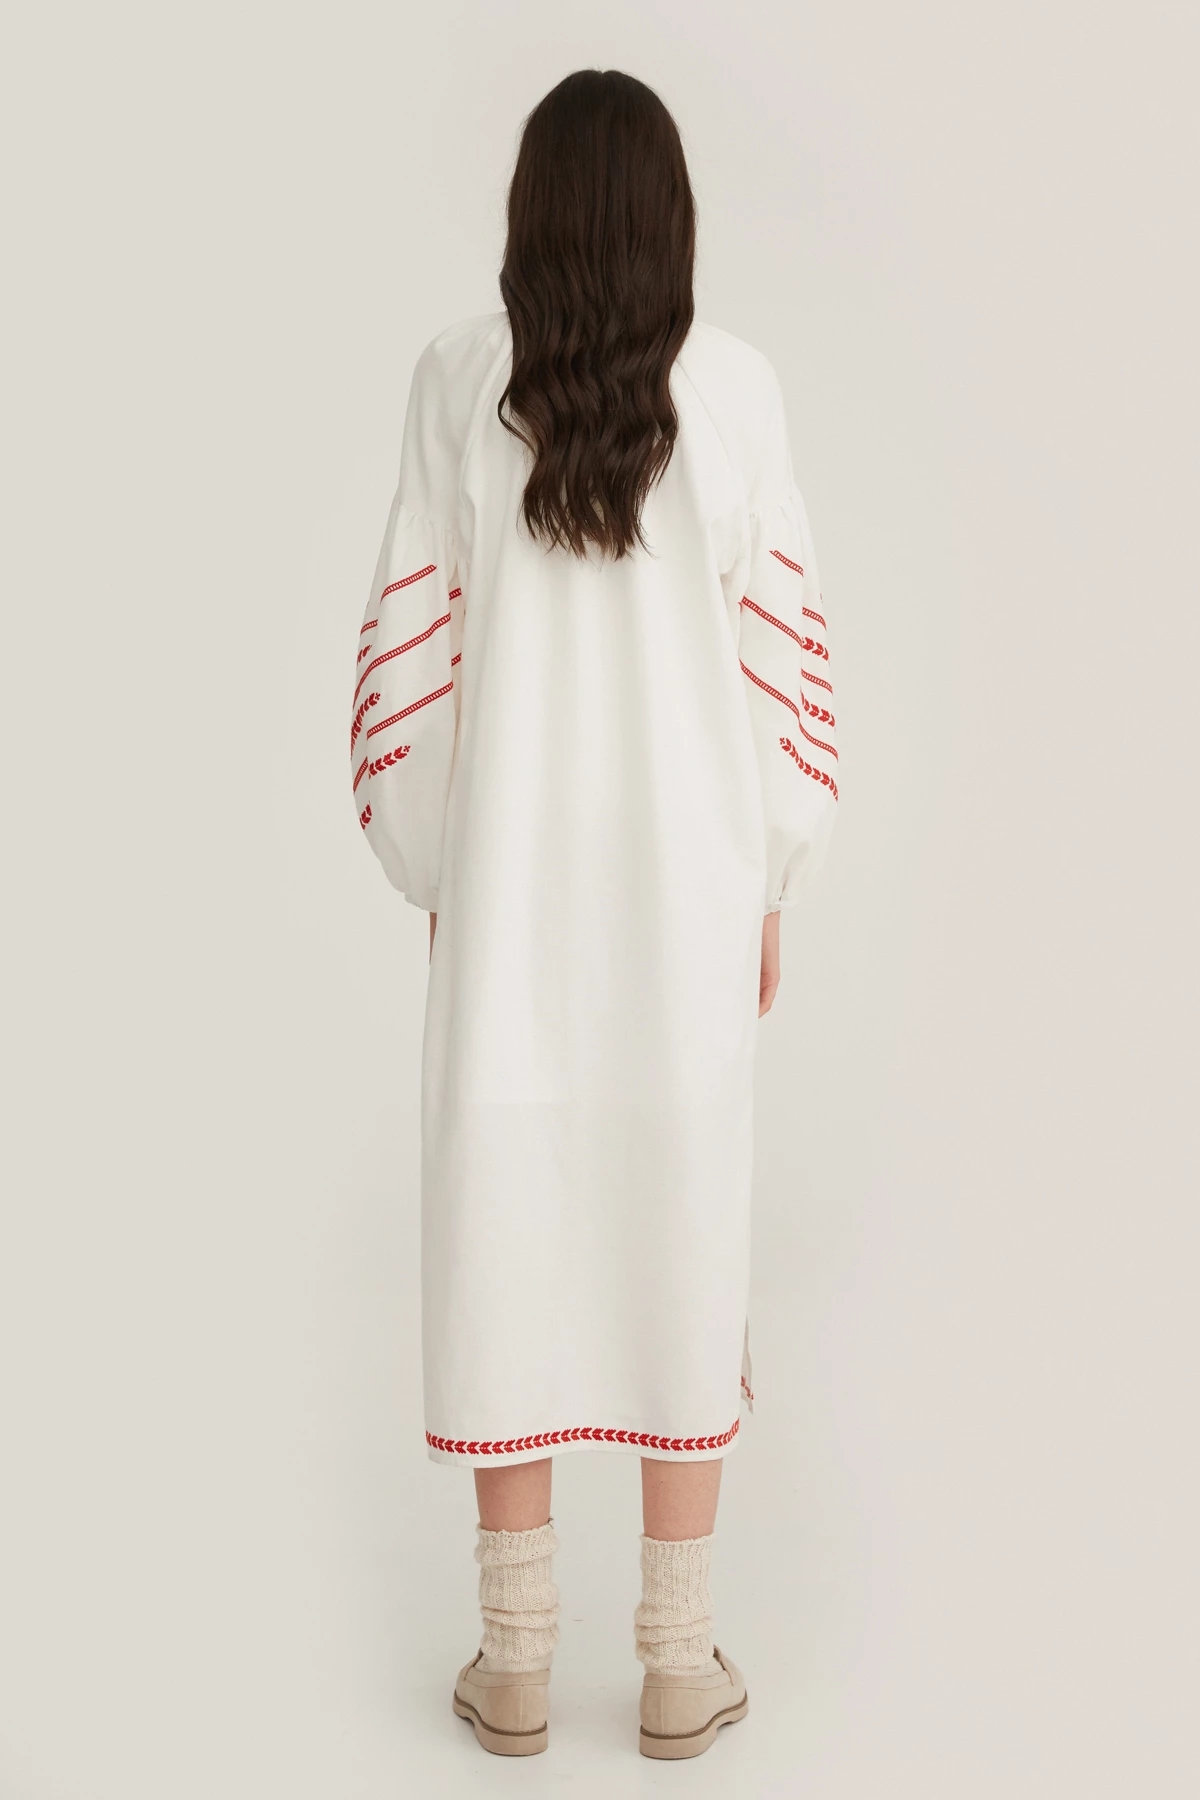 Milky linen vyshyvanka dress with wheat embroidery, photo 14